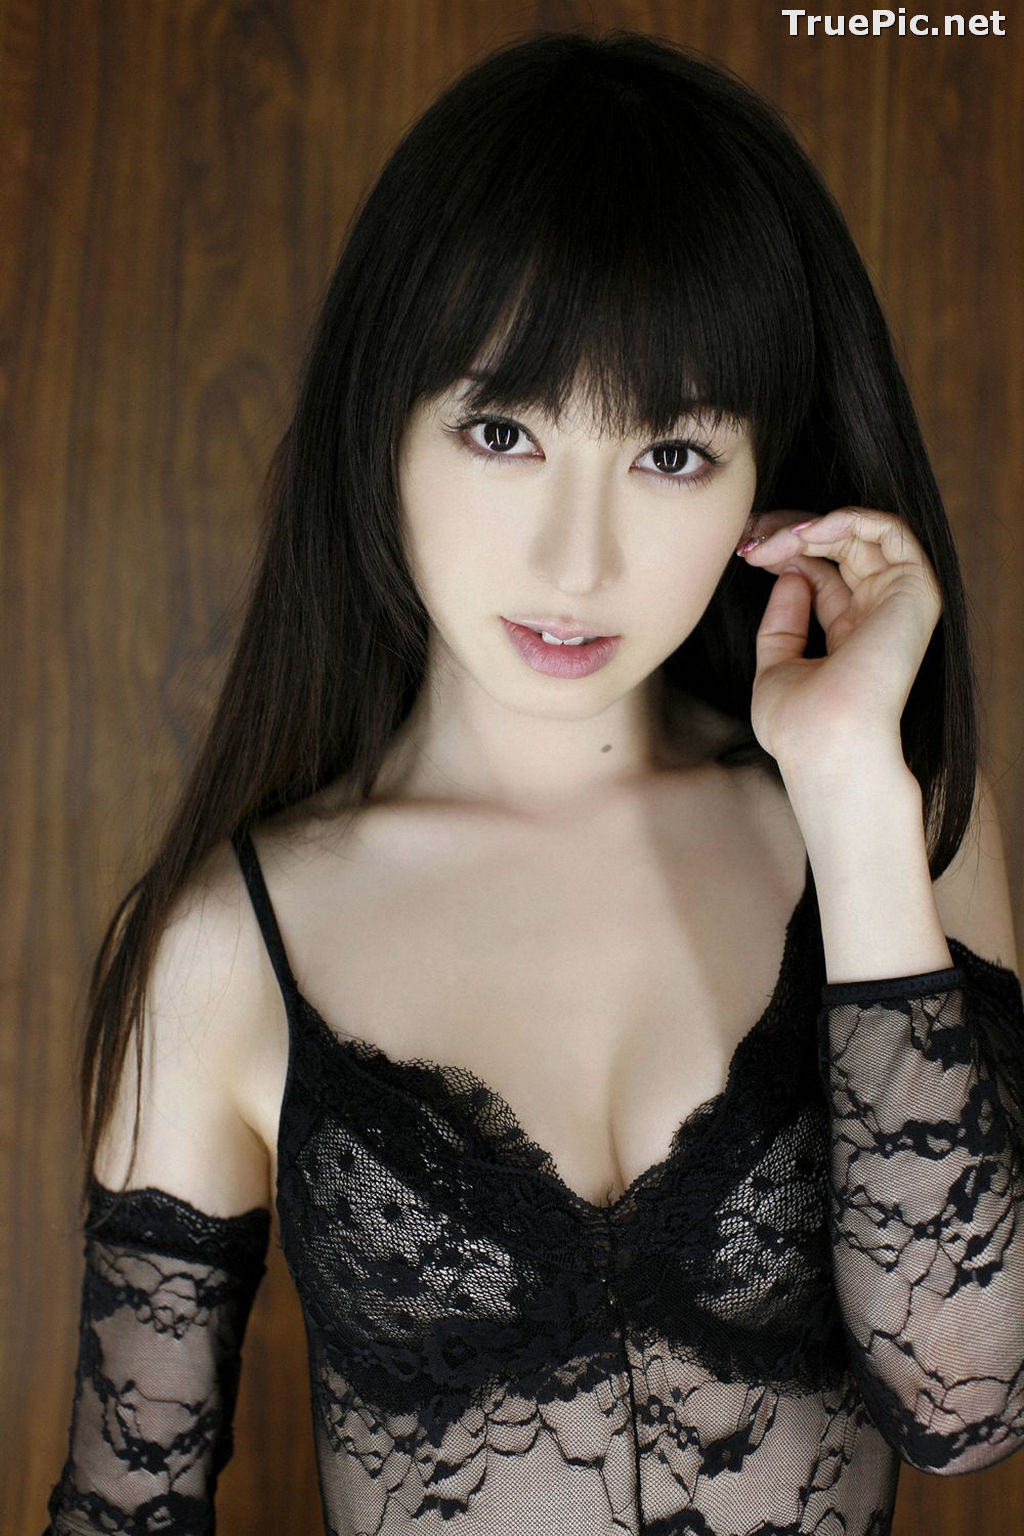 Image [YS Web] Vol.345 - Japanese Actress and Gravure Idol - Akiyama Rina - TruePic.net - Picture-92